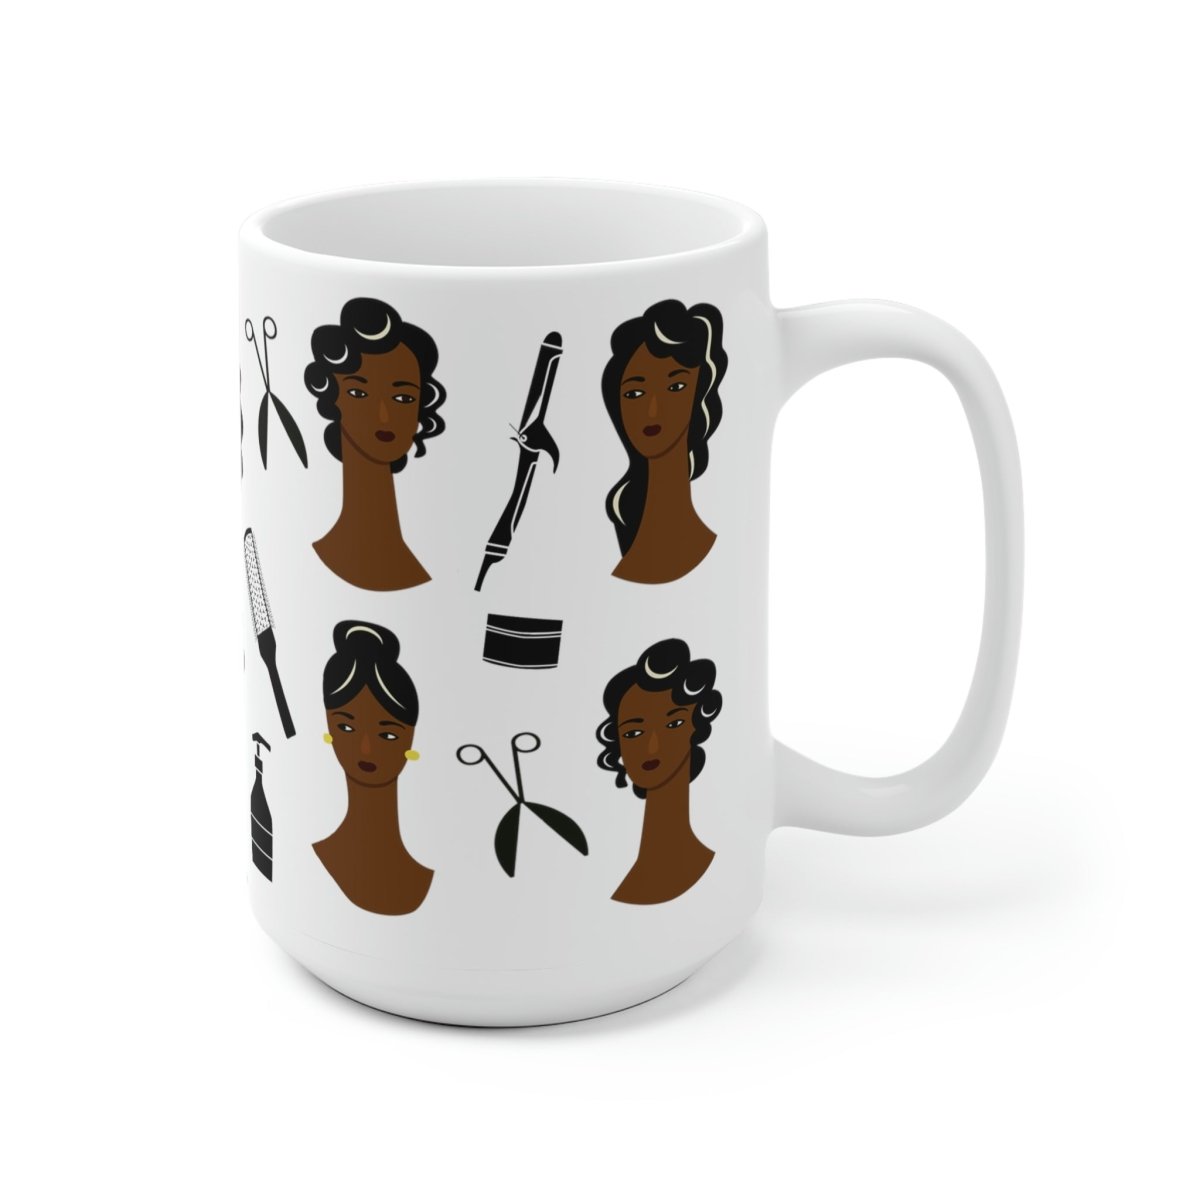 Hairstyles Mug - The Trini Gee